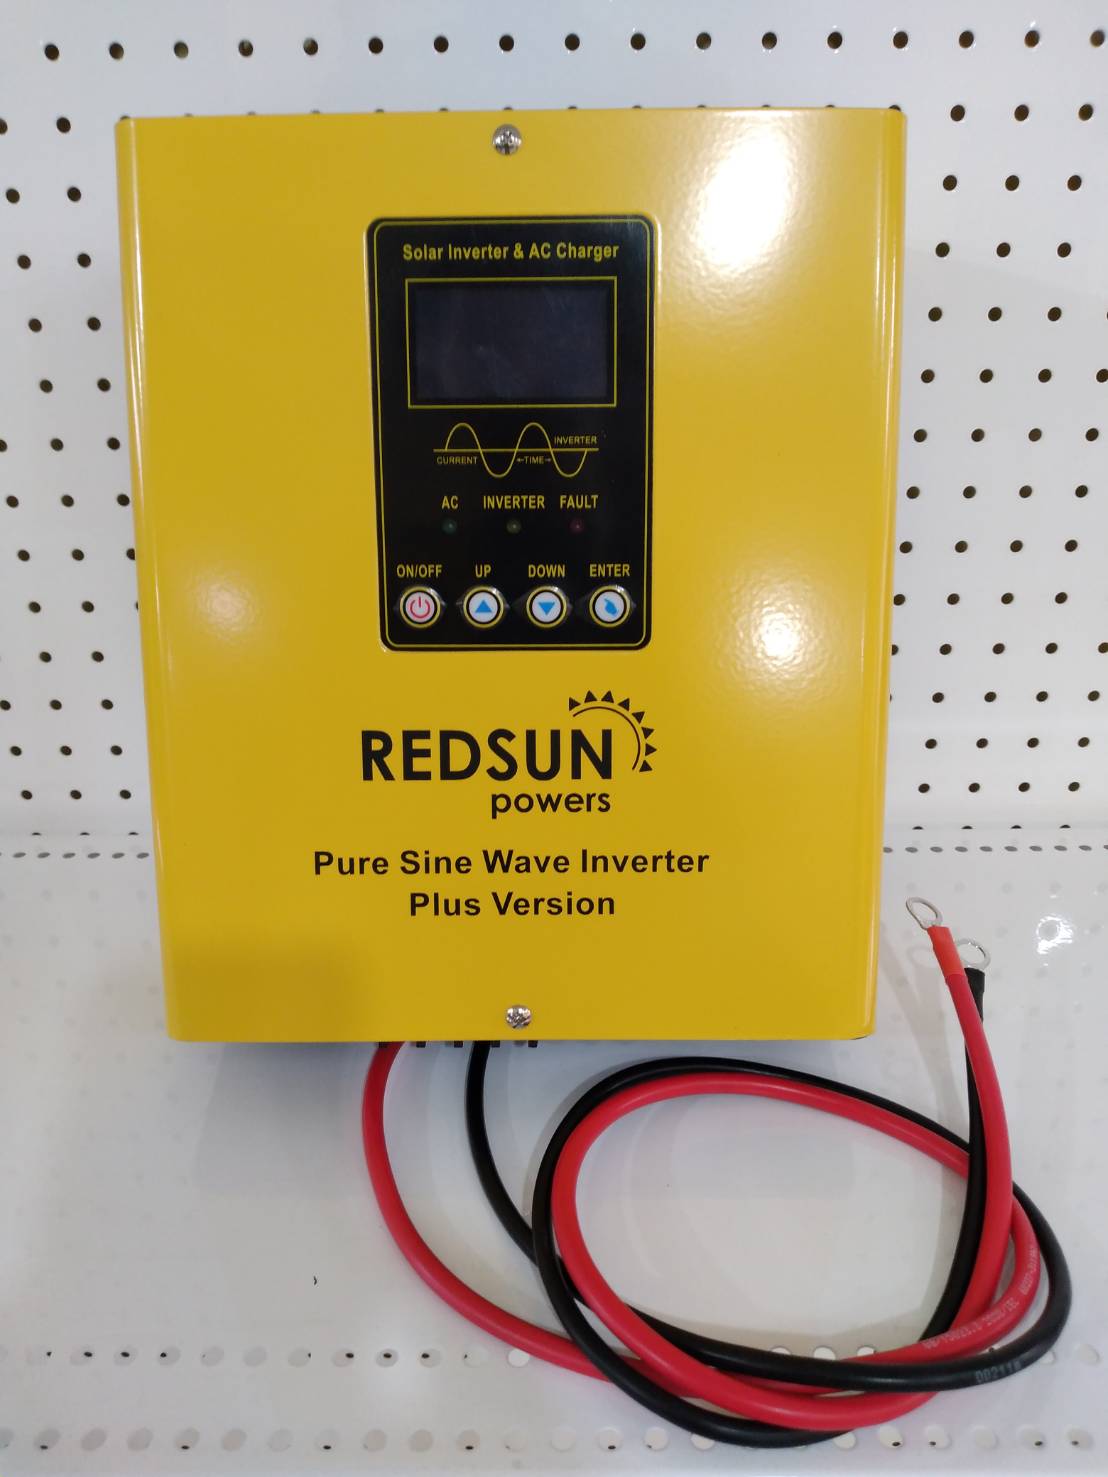 Redsunpowers 1200W หม้อแปลงเทอรอยด์ไฮบริดอินเวอร์เตอร์ Plus Version DC 24V เป็น AC 220V Pure Sine Wave 1200W Hybrid Solar Inverter with PWM 30A Control Charger and AC Battery Charger